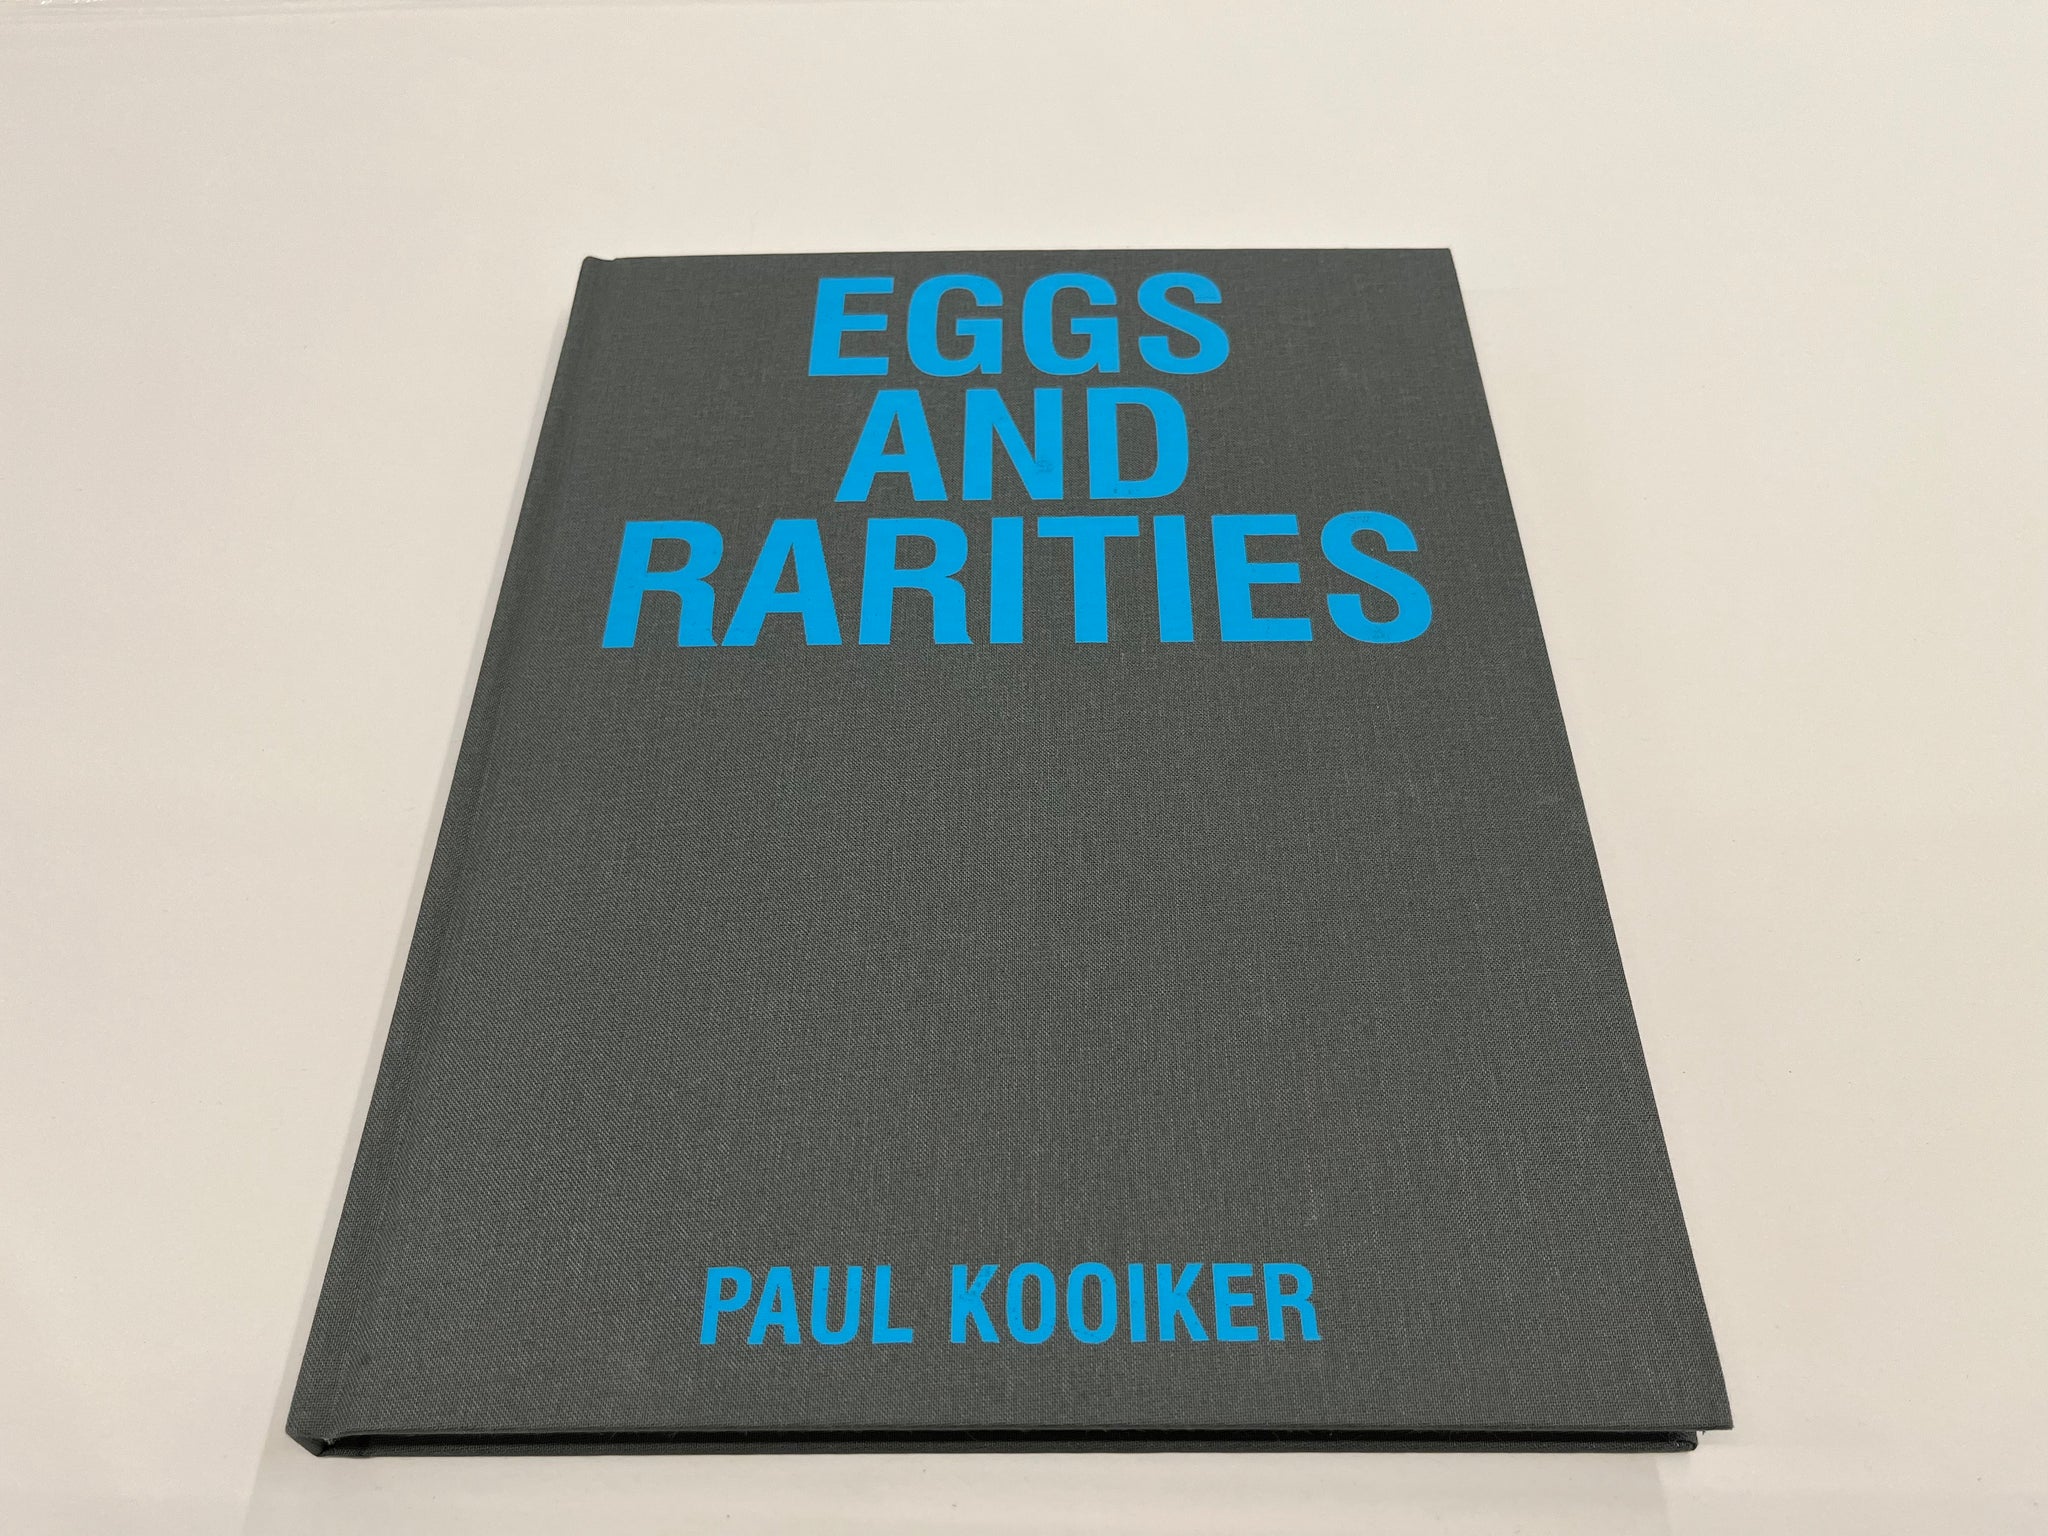 Eggs and rarities by Paul Kooiker